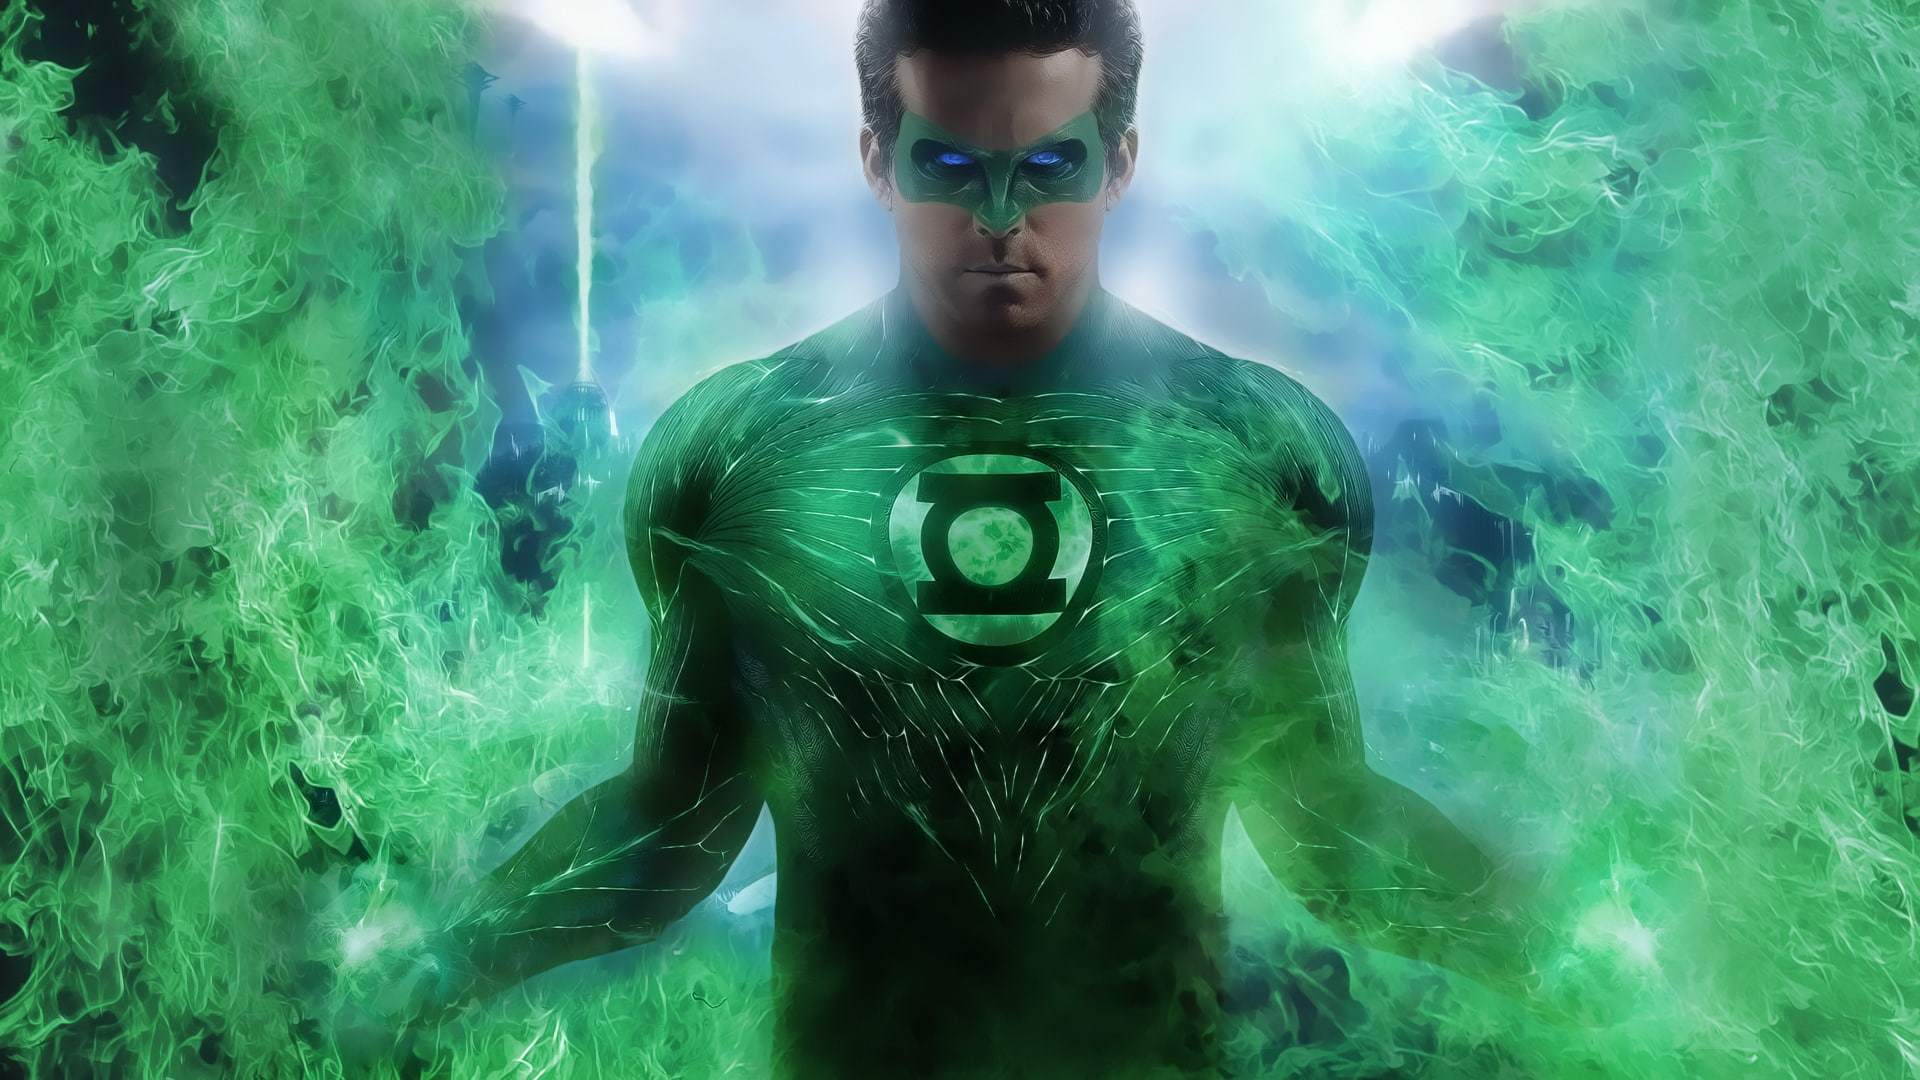 Ryan Reynolds And Hal Jordan In Green Lantern Movie Dc Comics Desktop Wallpaper Hd For Mobile Phones And Laptops 1920×1080